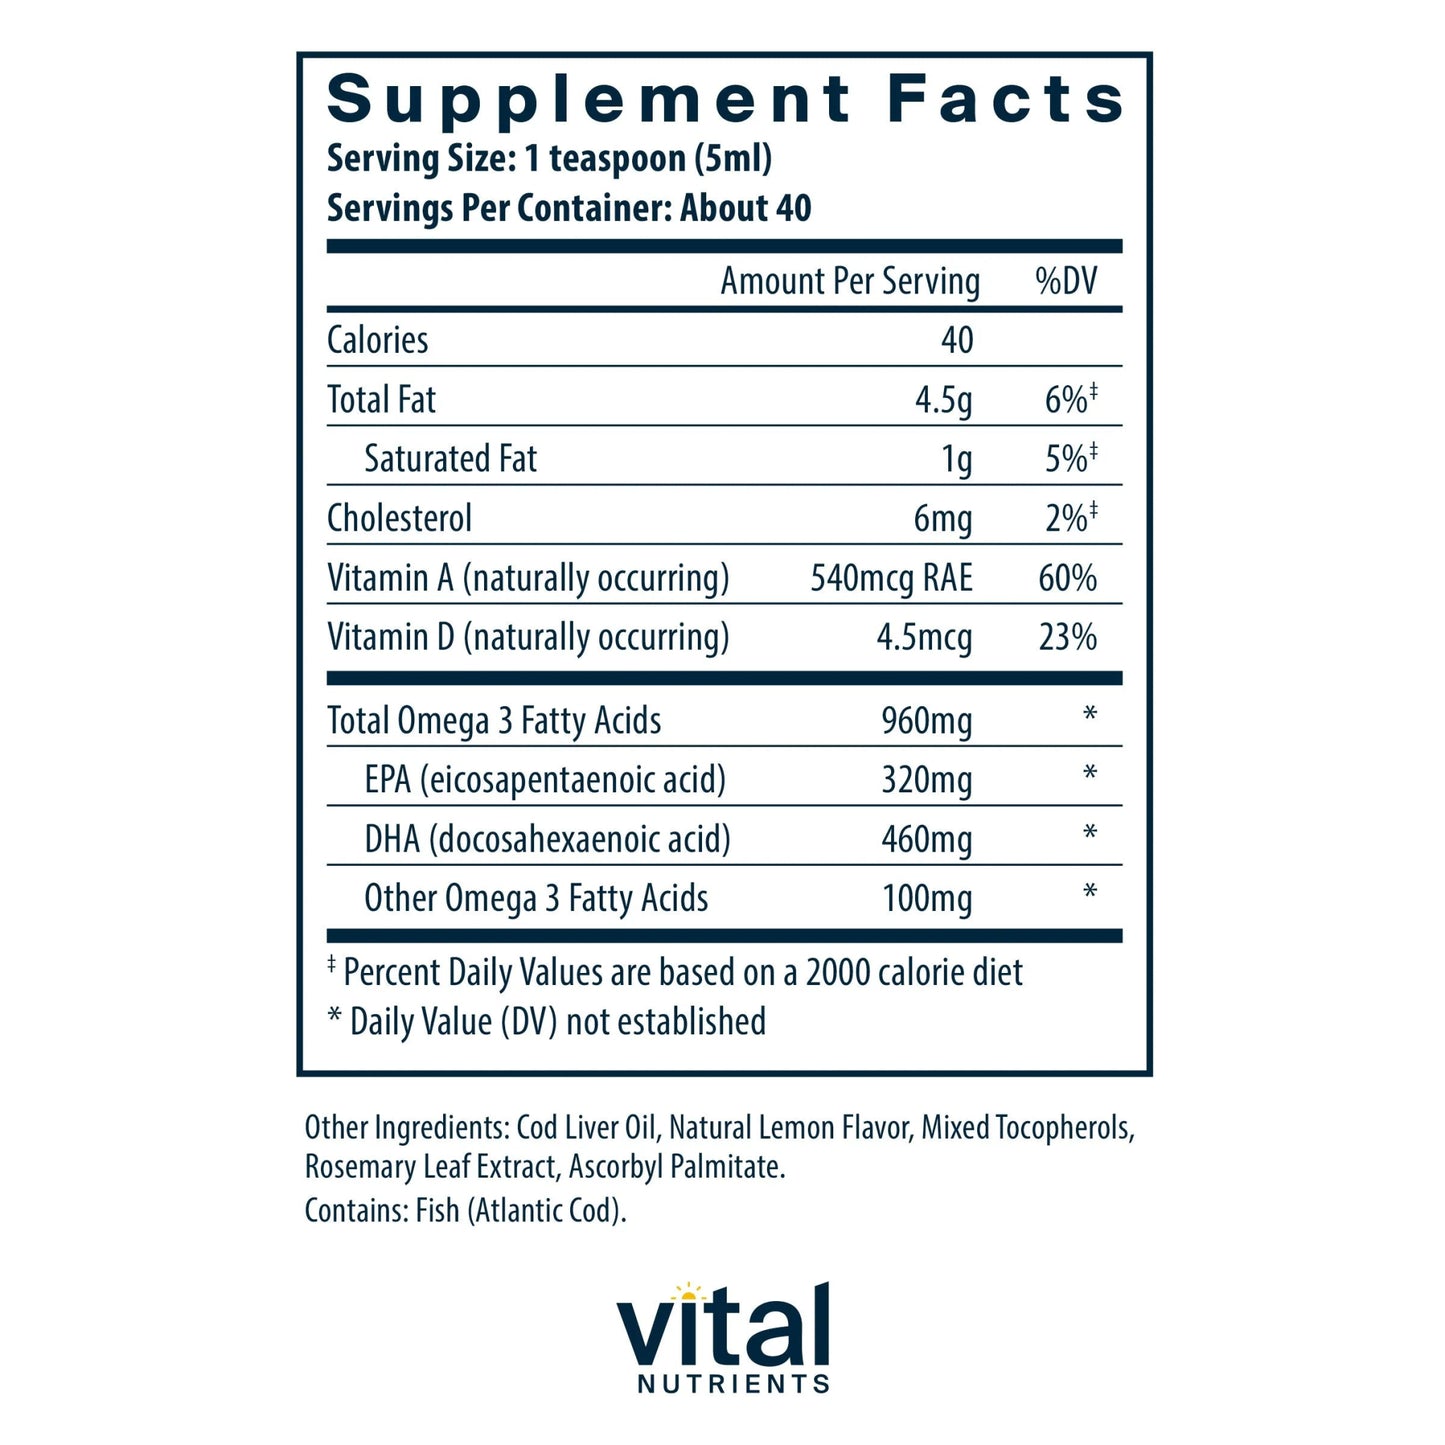 Ultra Pure® Cod Liver Oil 1025 Pharmaceutical Grade(Vital Nutrition) - HAPIVERI